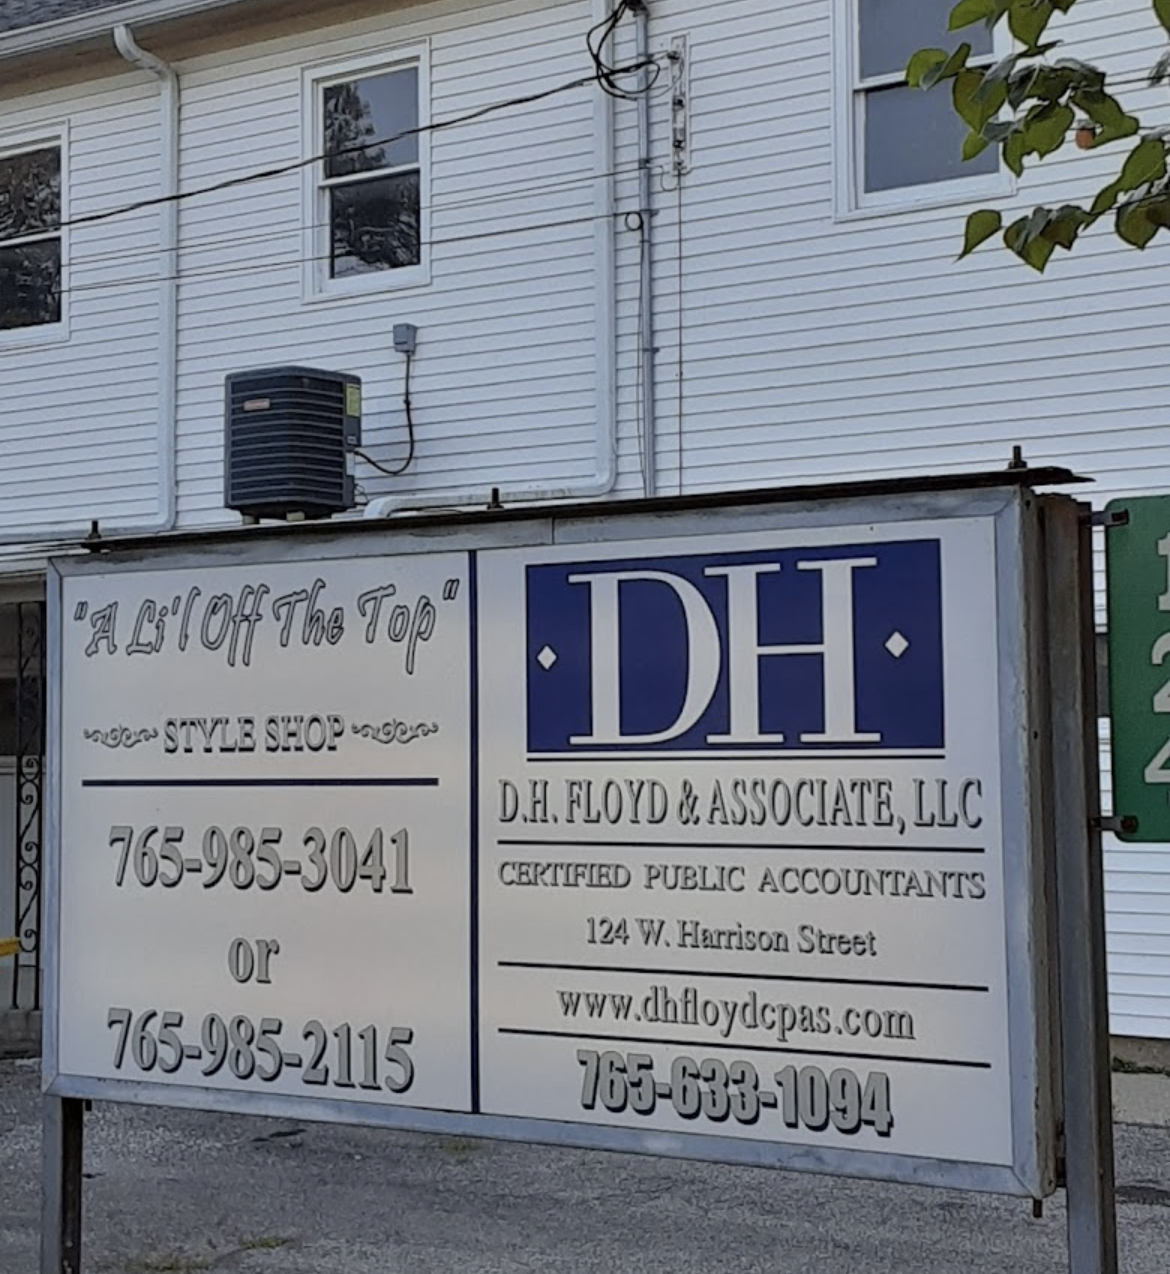 DH Floyd and Associates LLC 124 W Harrison St, Denver Indiana 46926